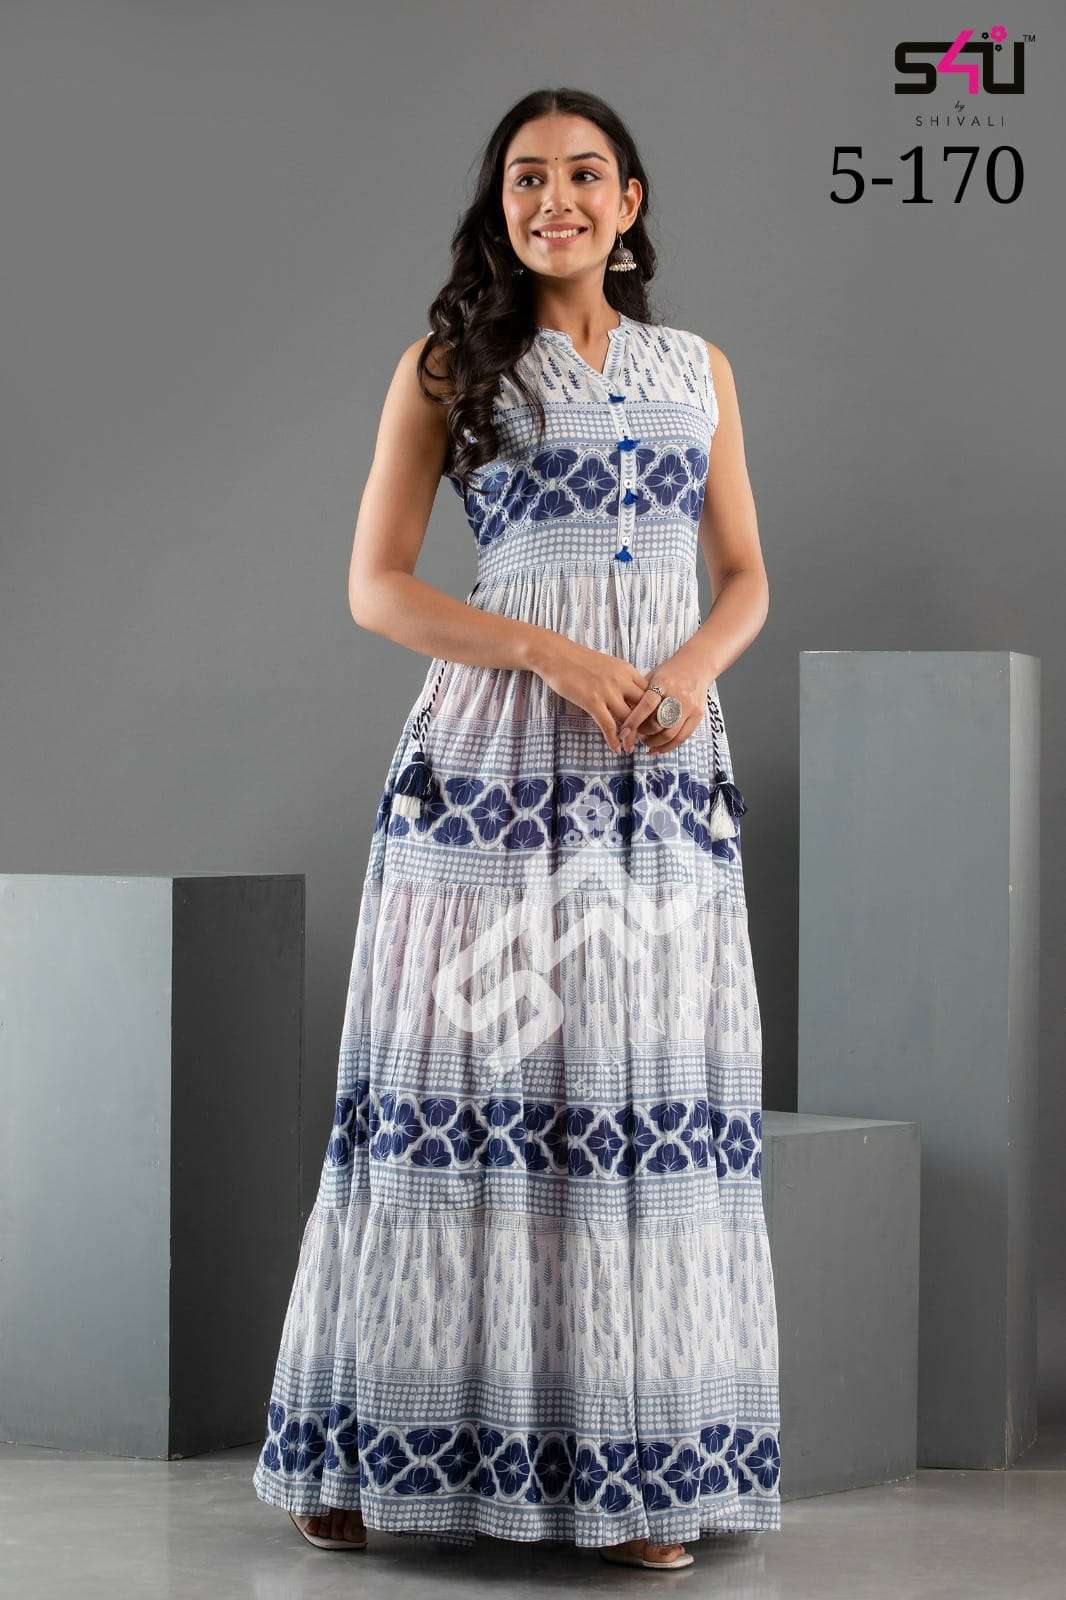 5-170 design s4u shivali designer fancy designer wedding wear floor length gown wholesaler